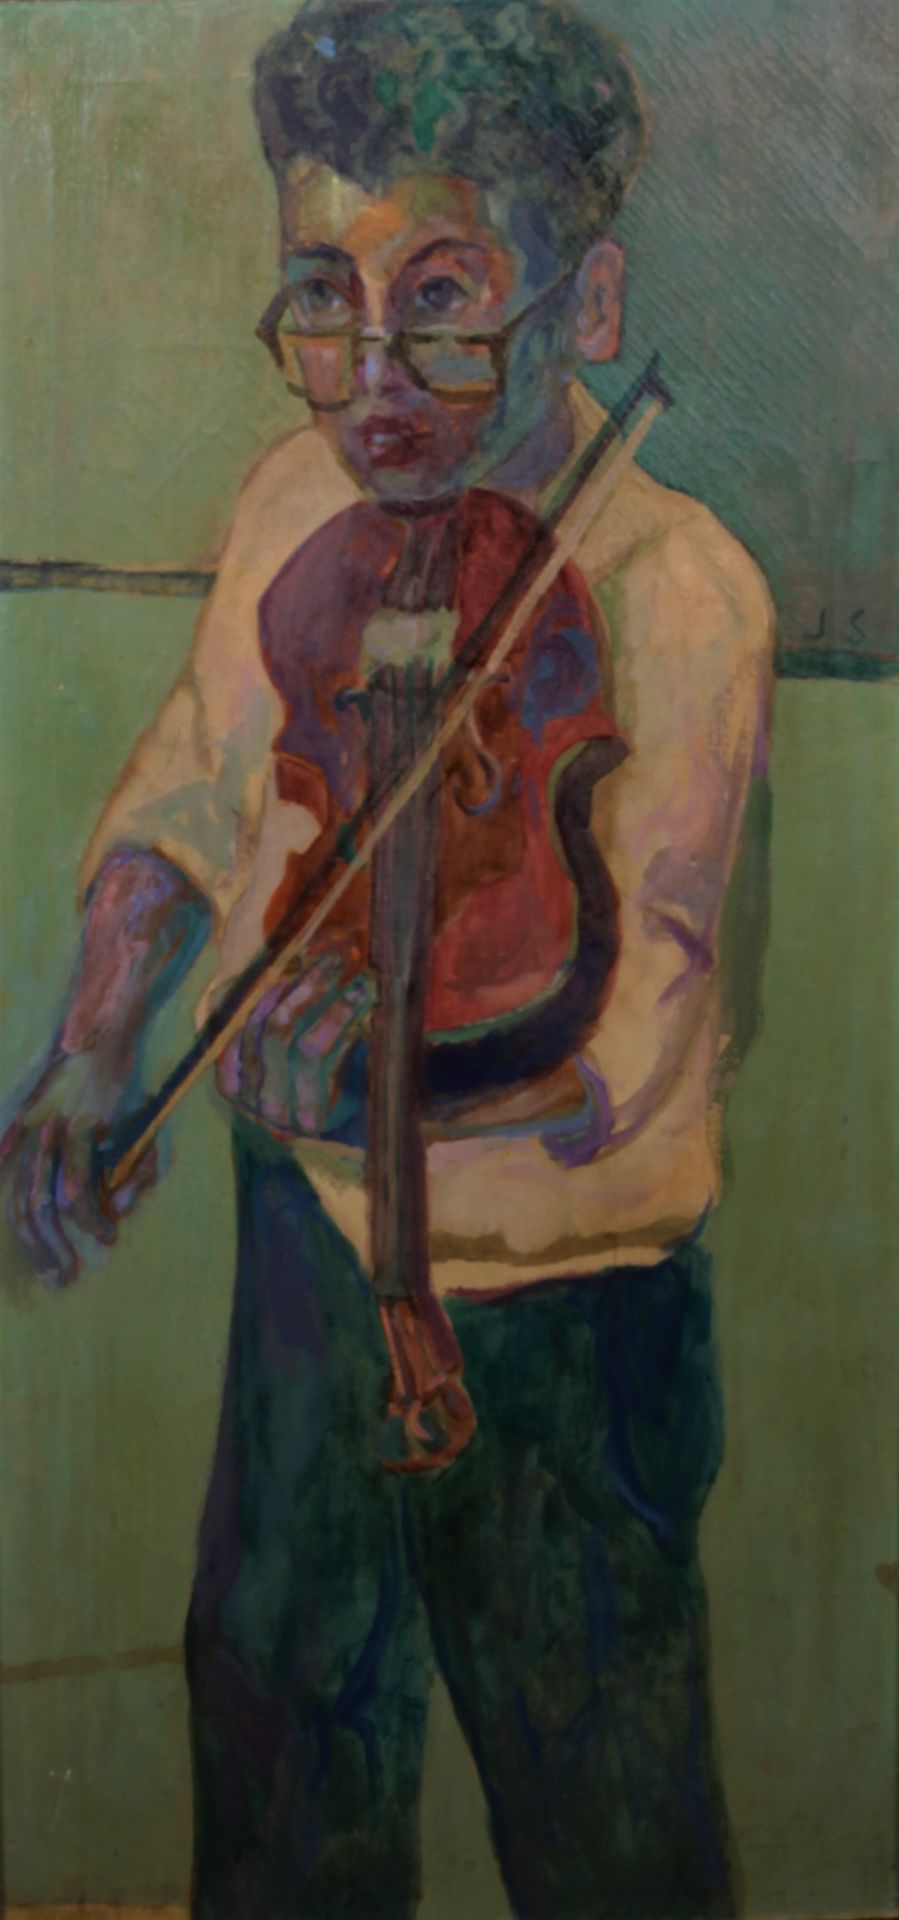 Solman, Joseph. A young boy with a violin.